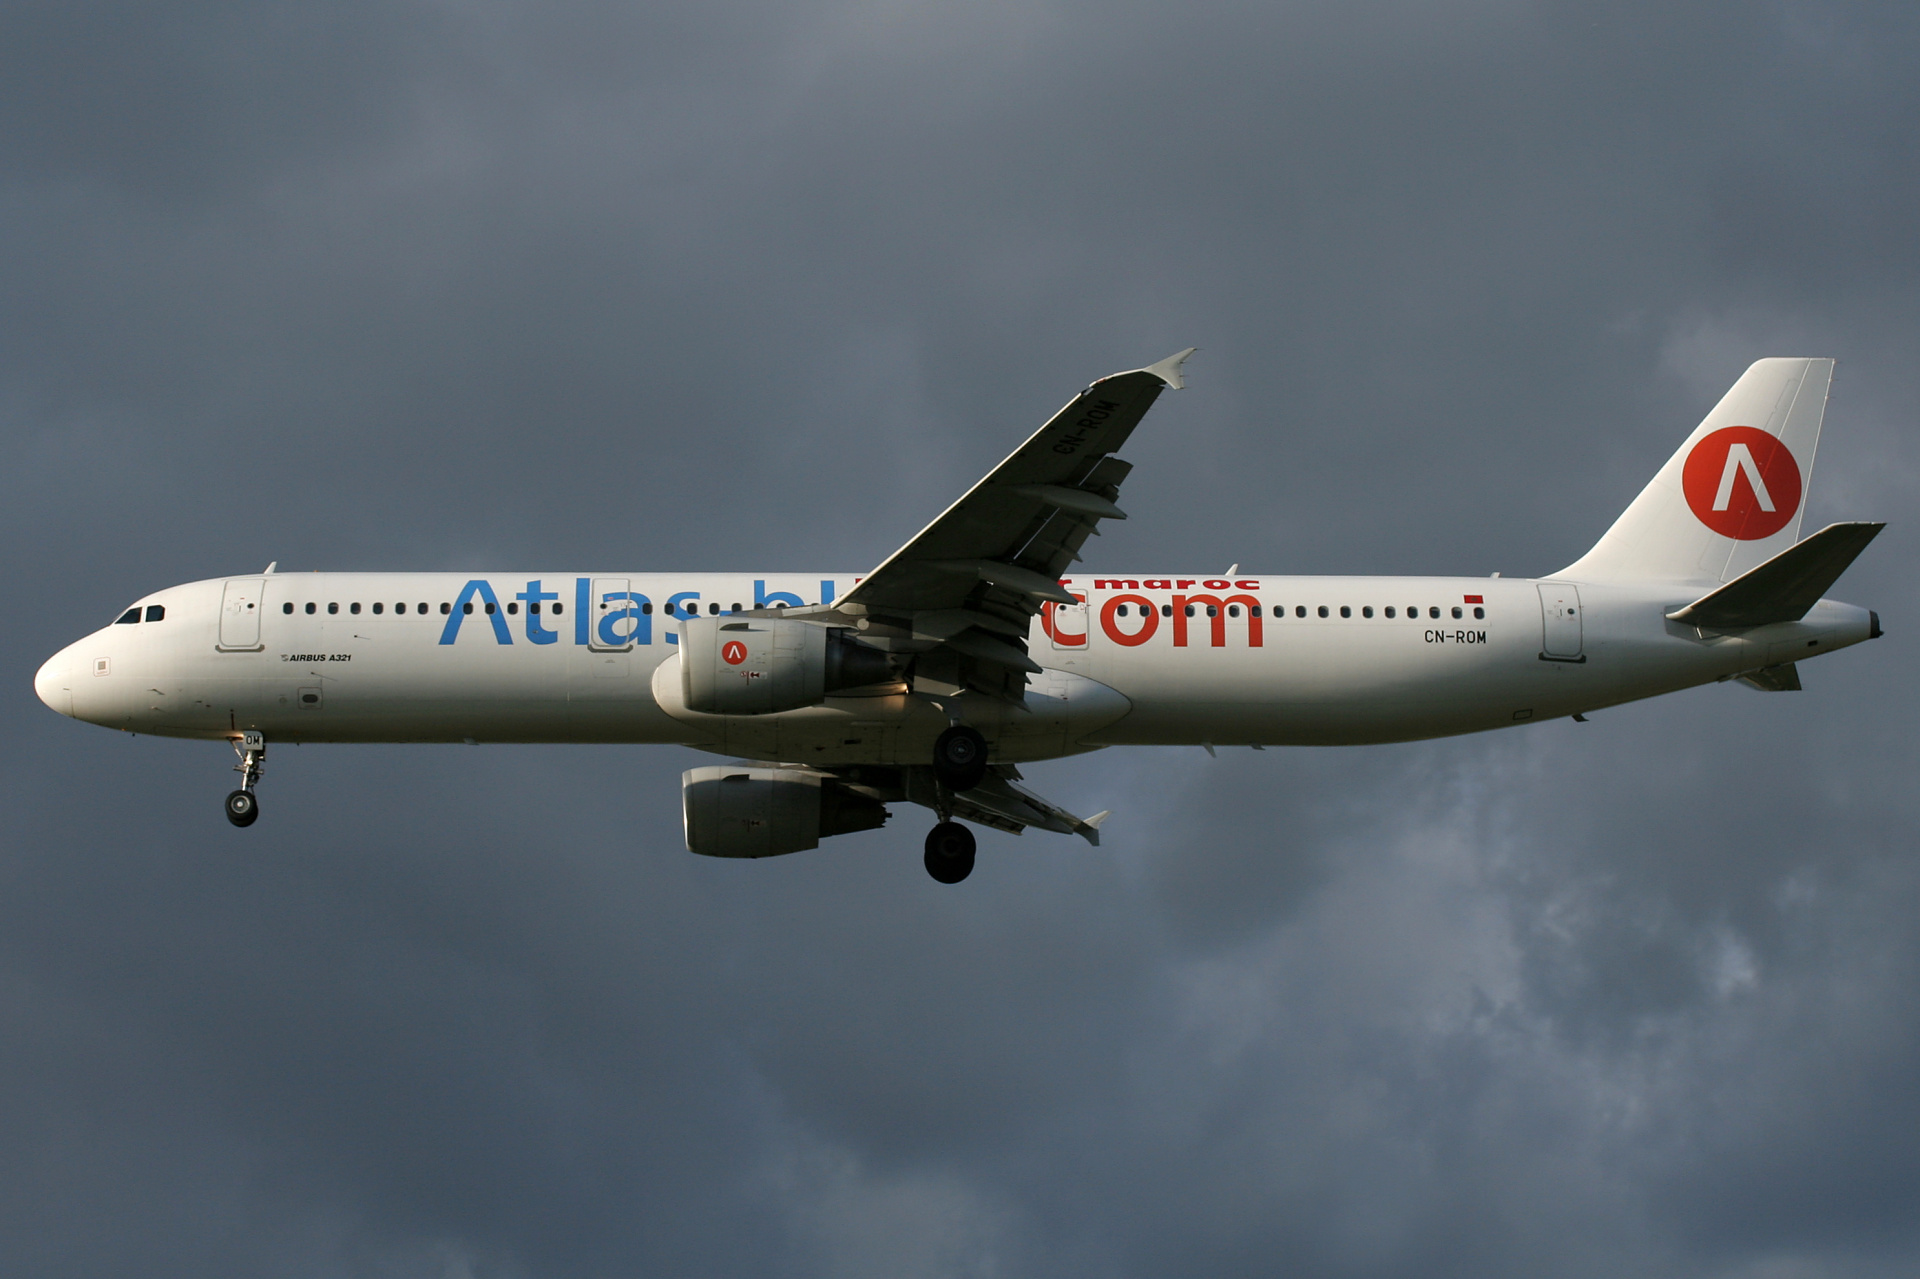 CN-ROM, Atlas Blue - Royal Air Maroc (Aircraft » EPWA Spotting » Airbus A321-200)